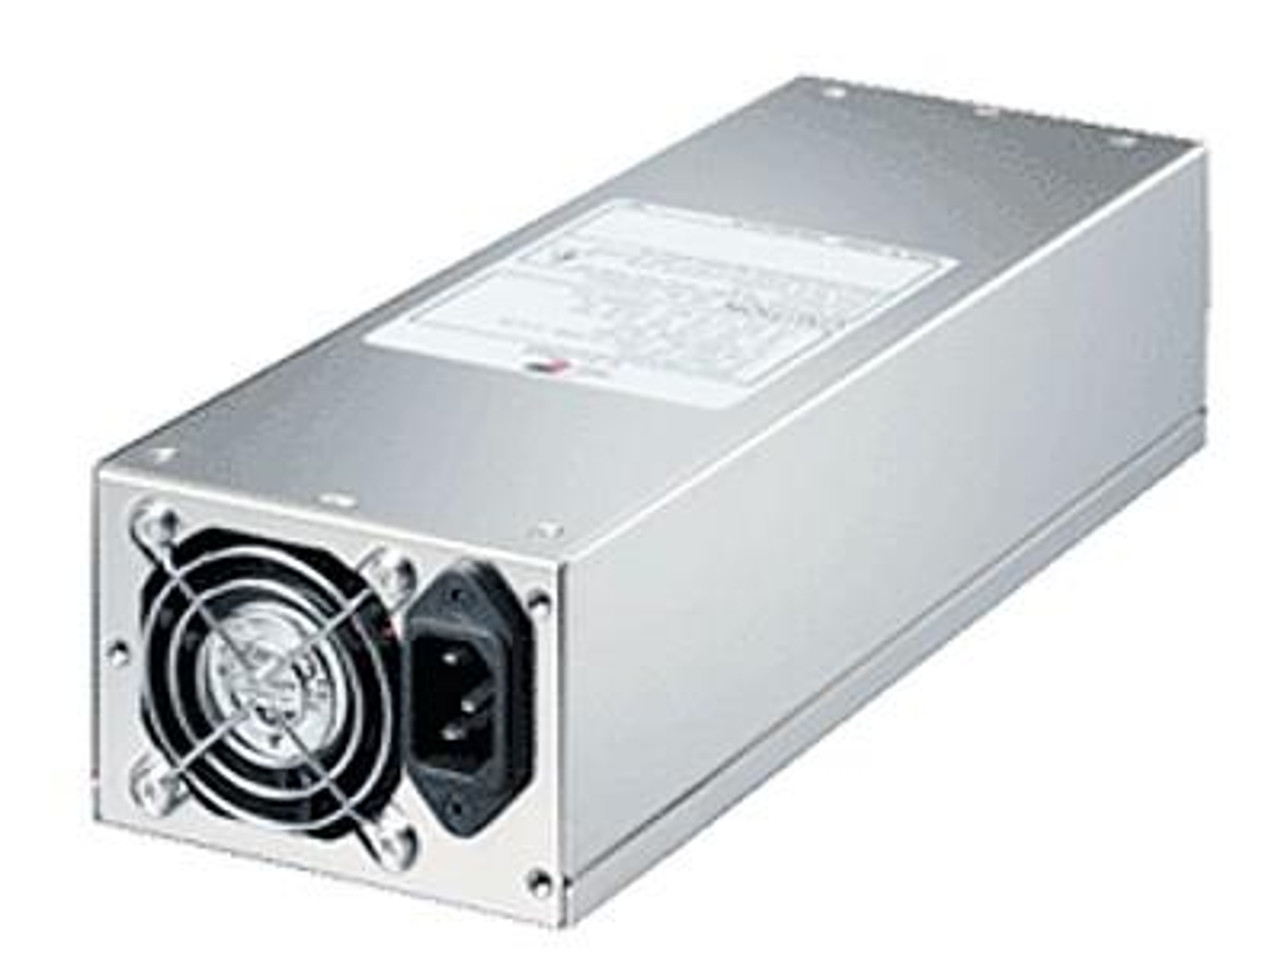 P2H-6350P Emacs 350-Watts ATX12V 2U Power Supply